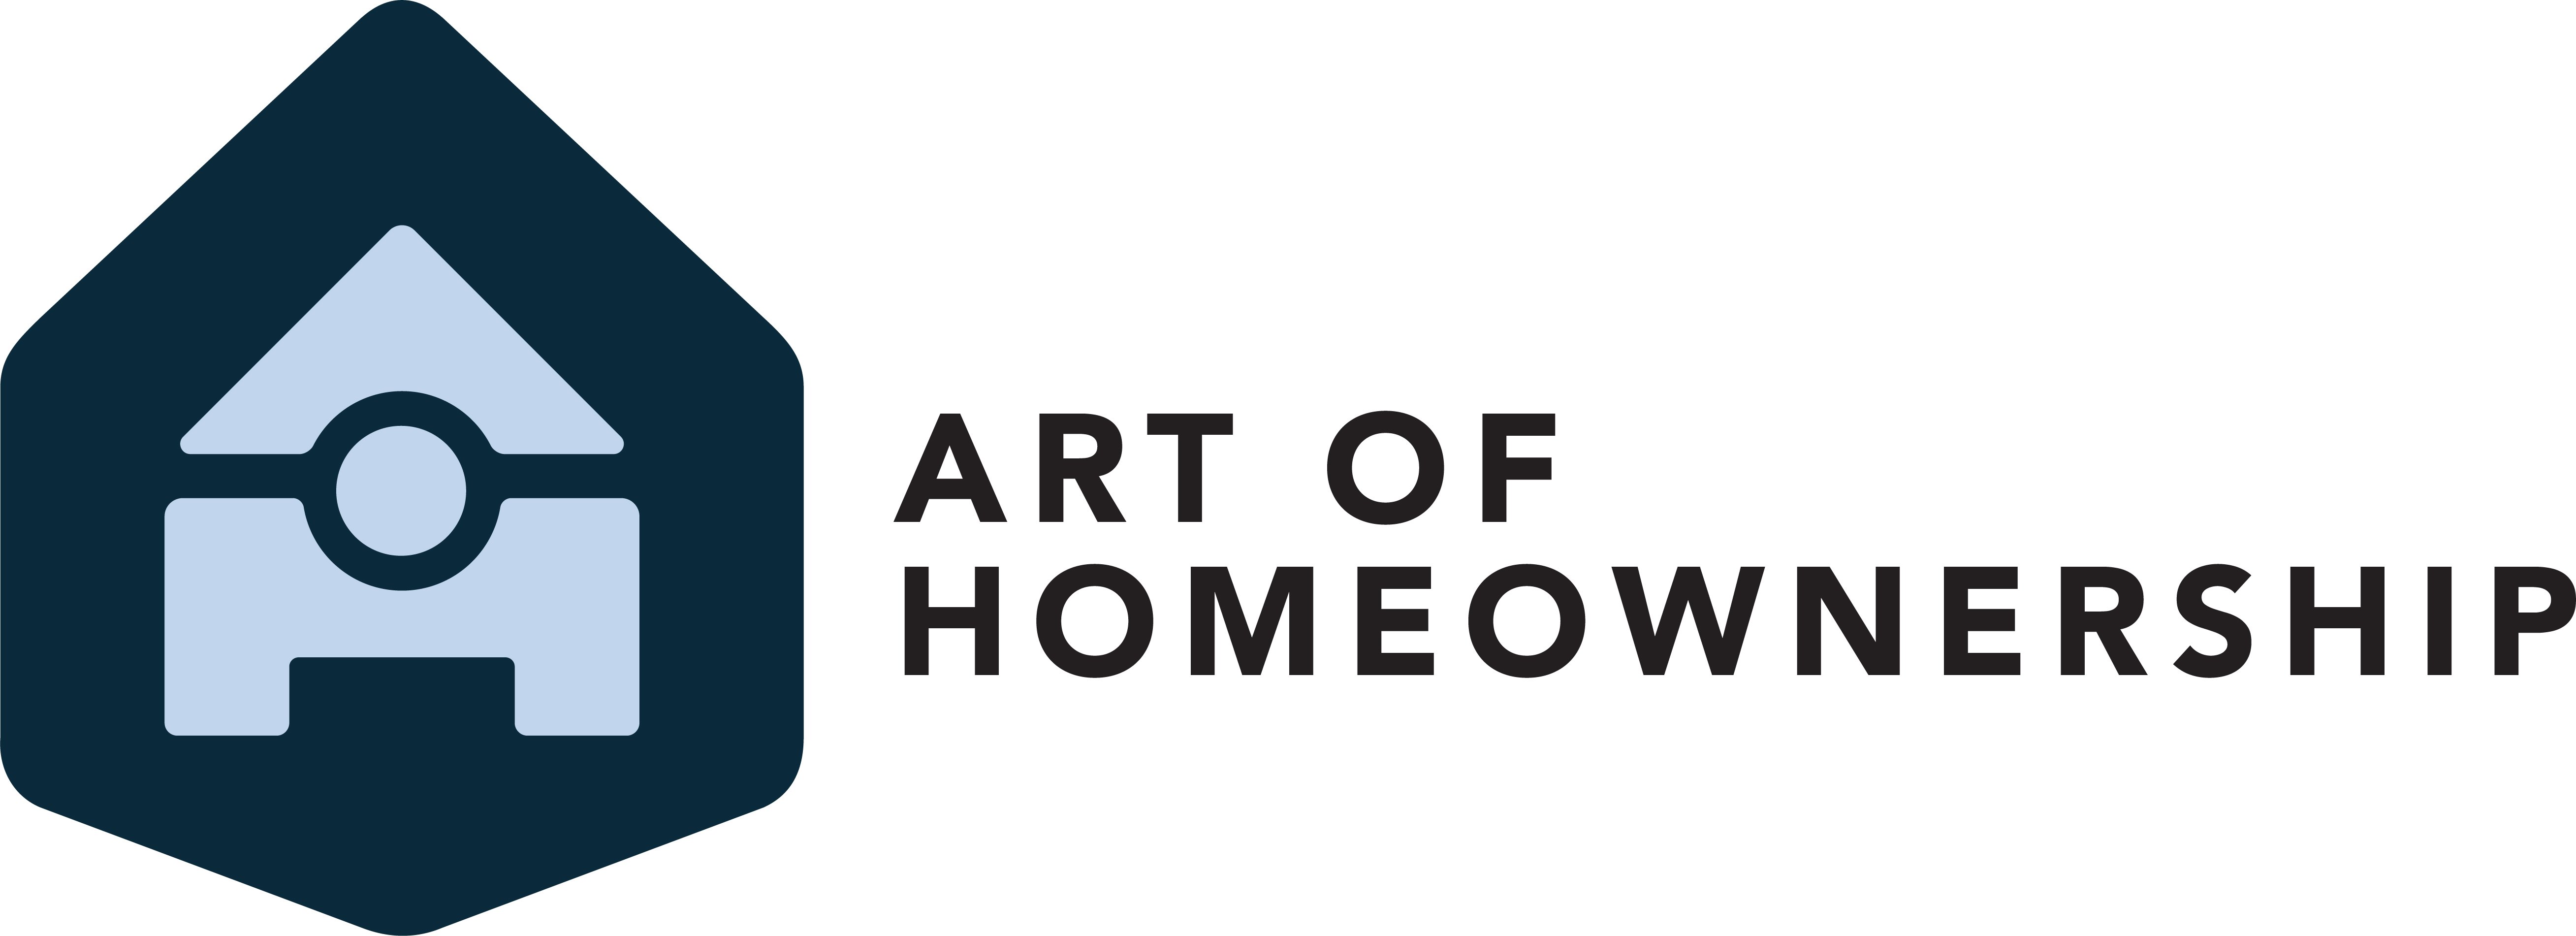 Art of Homeownership